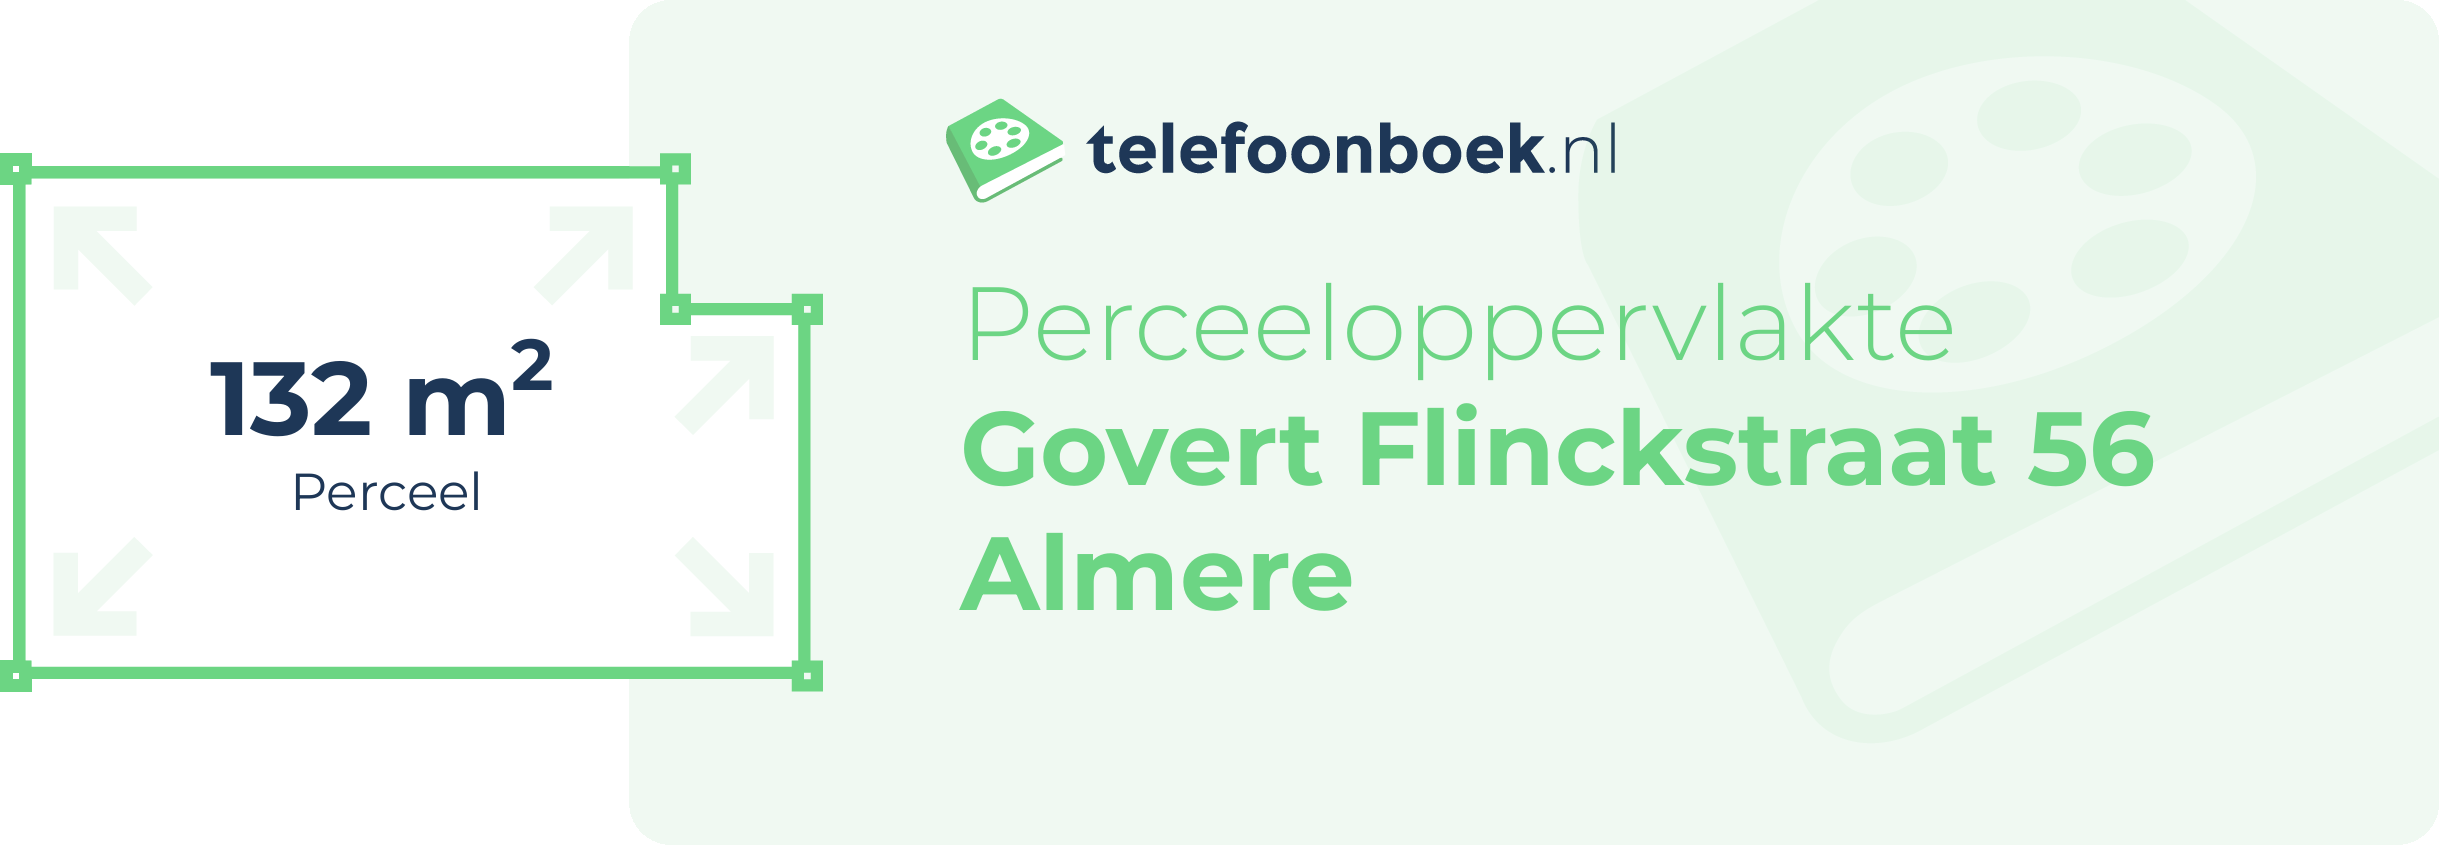 Perceeloppervlakte Govert Flinckstraat 56 Almere